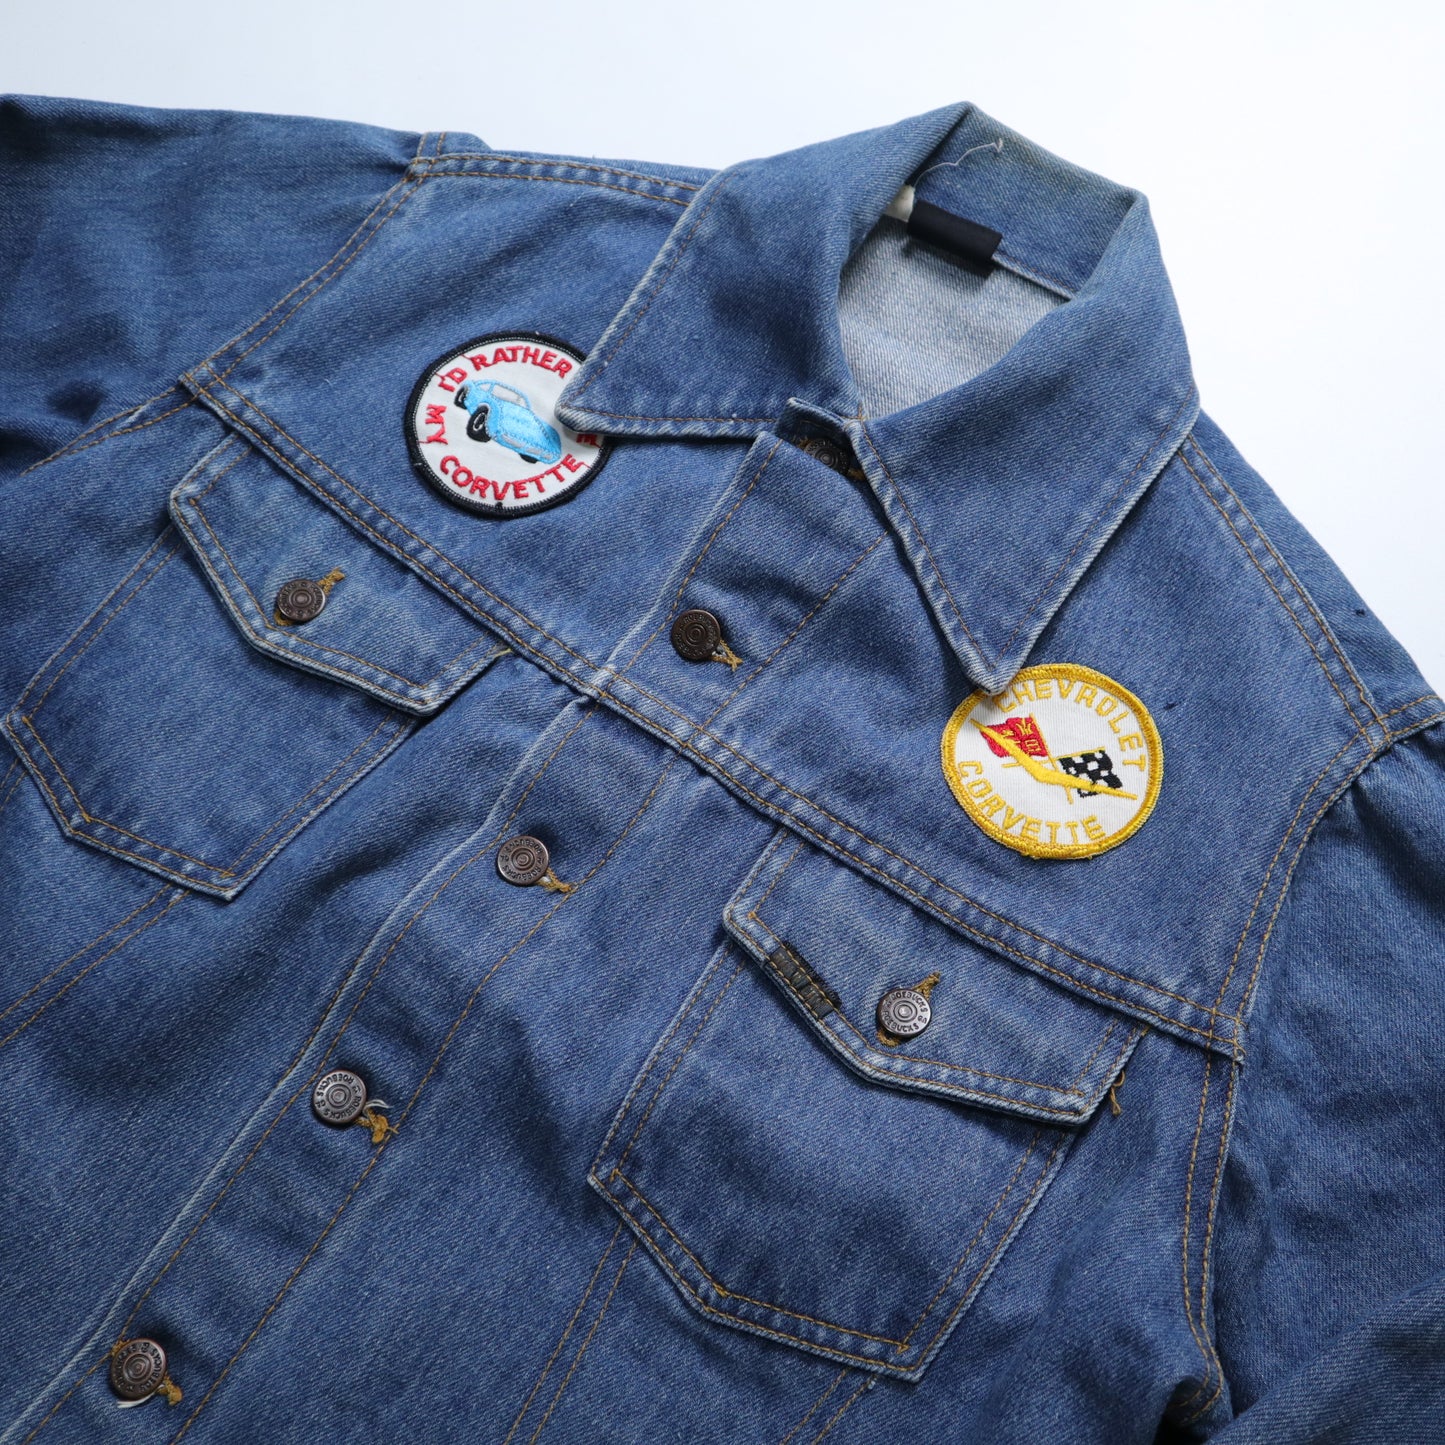 60-70s Sears Roebuck Selvedge denim jacket racing patch denim jacket